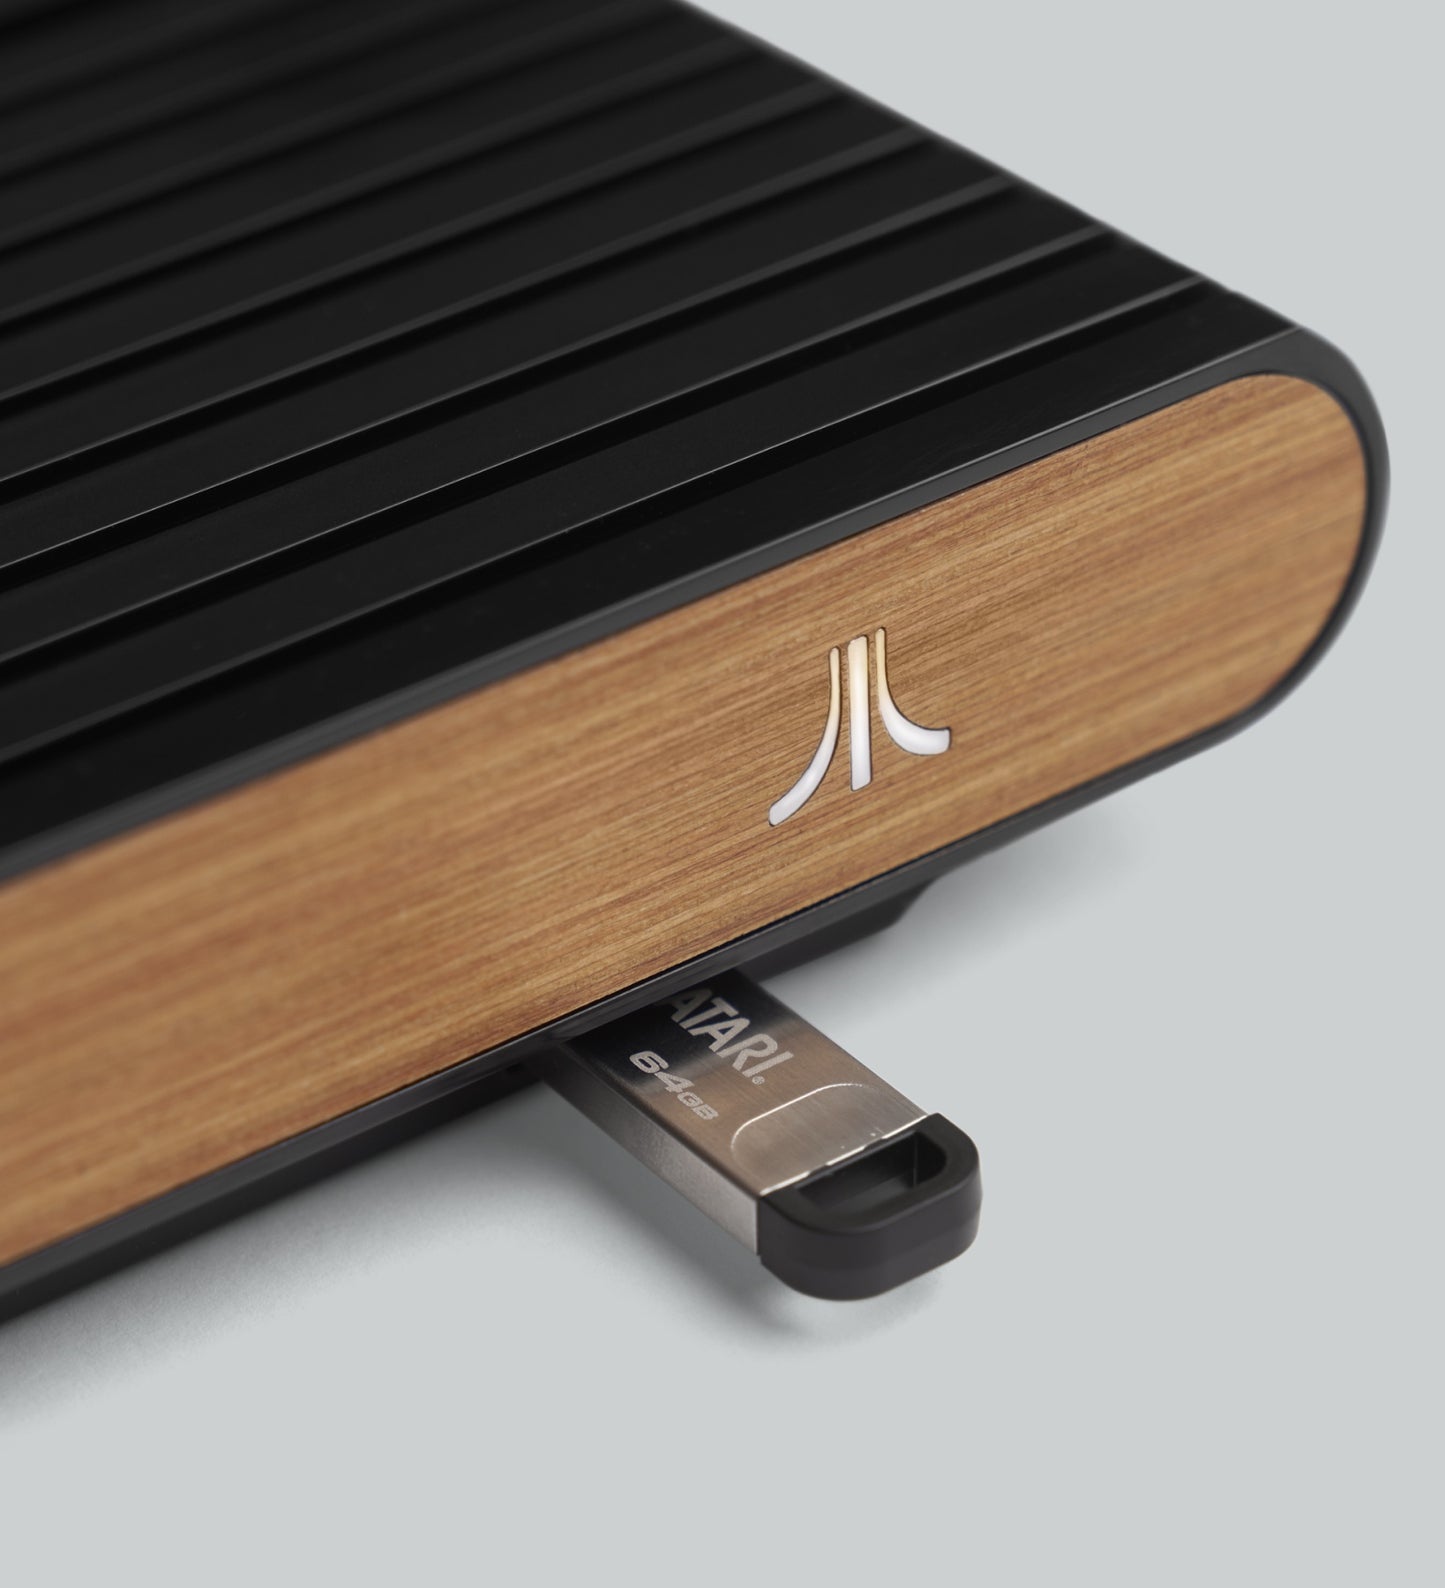 Atari VCS PC Mode USB